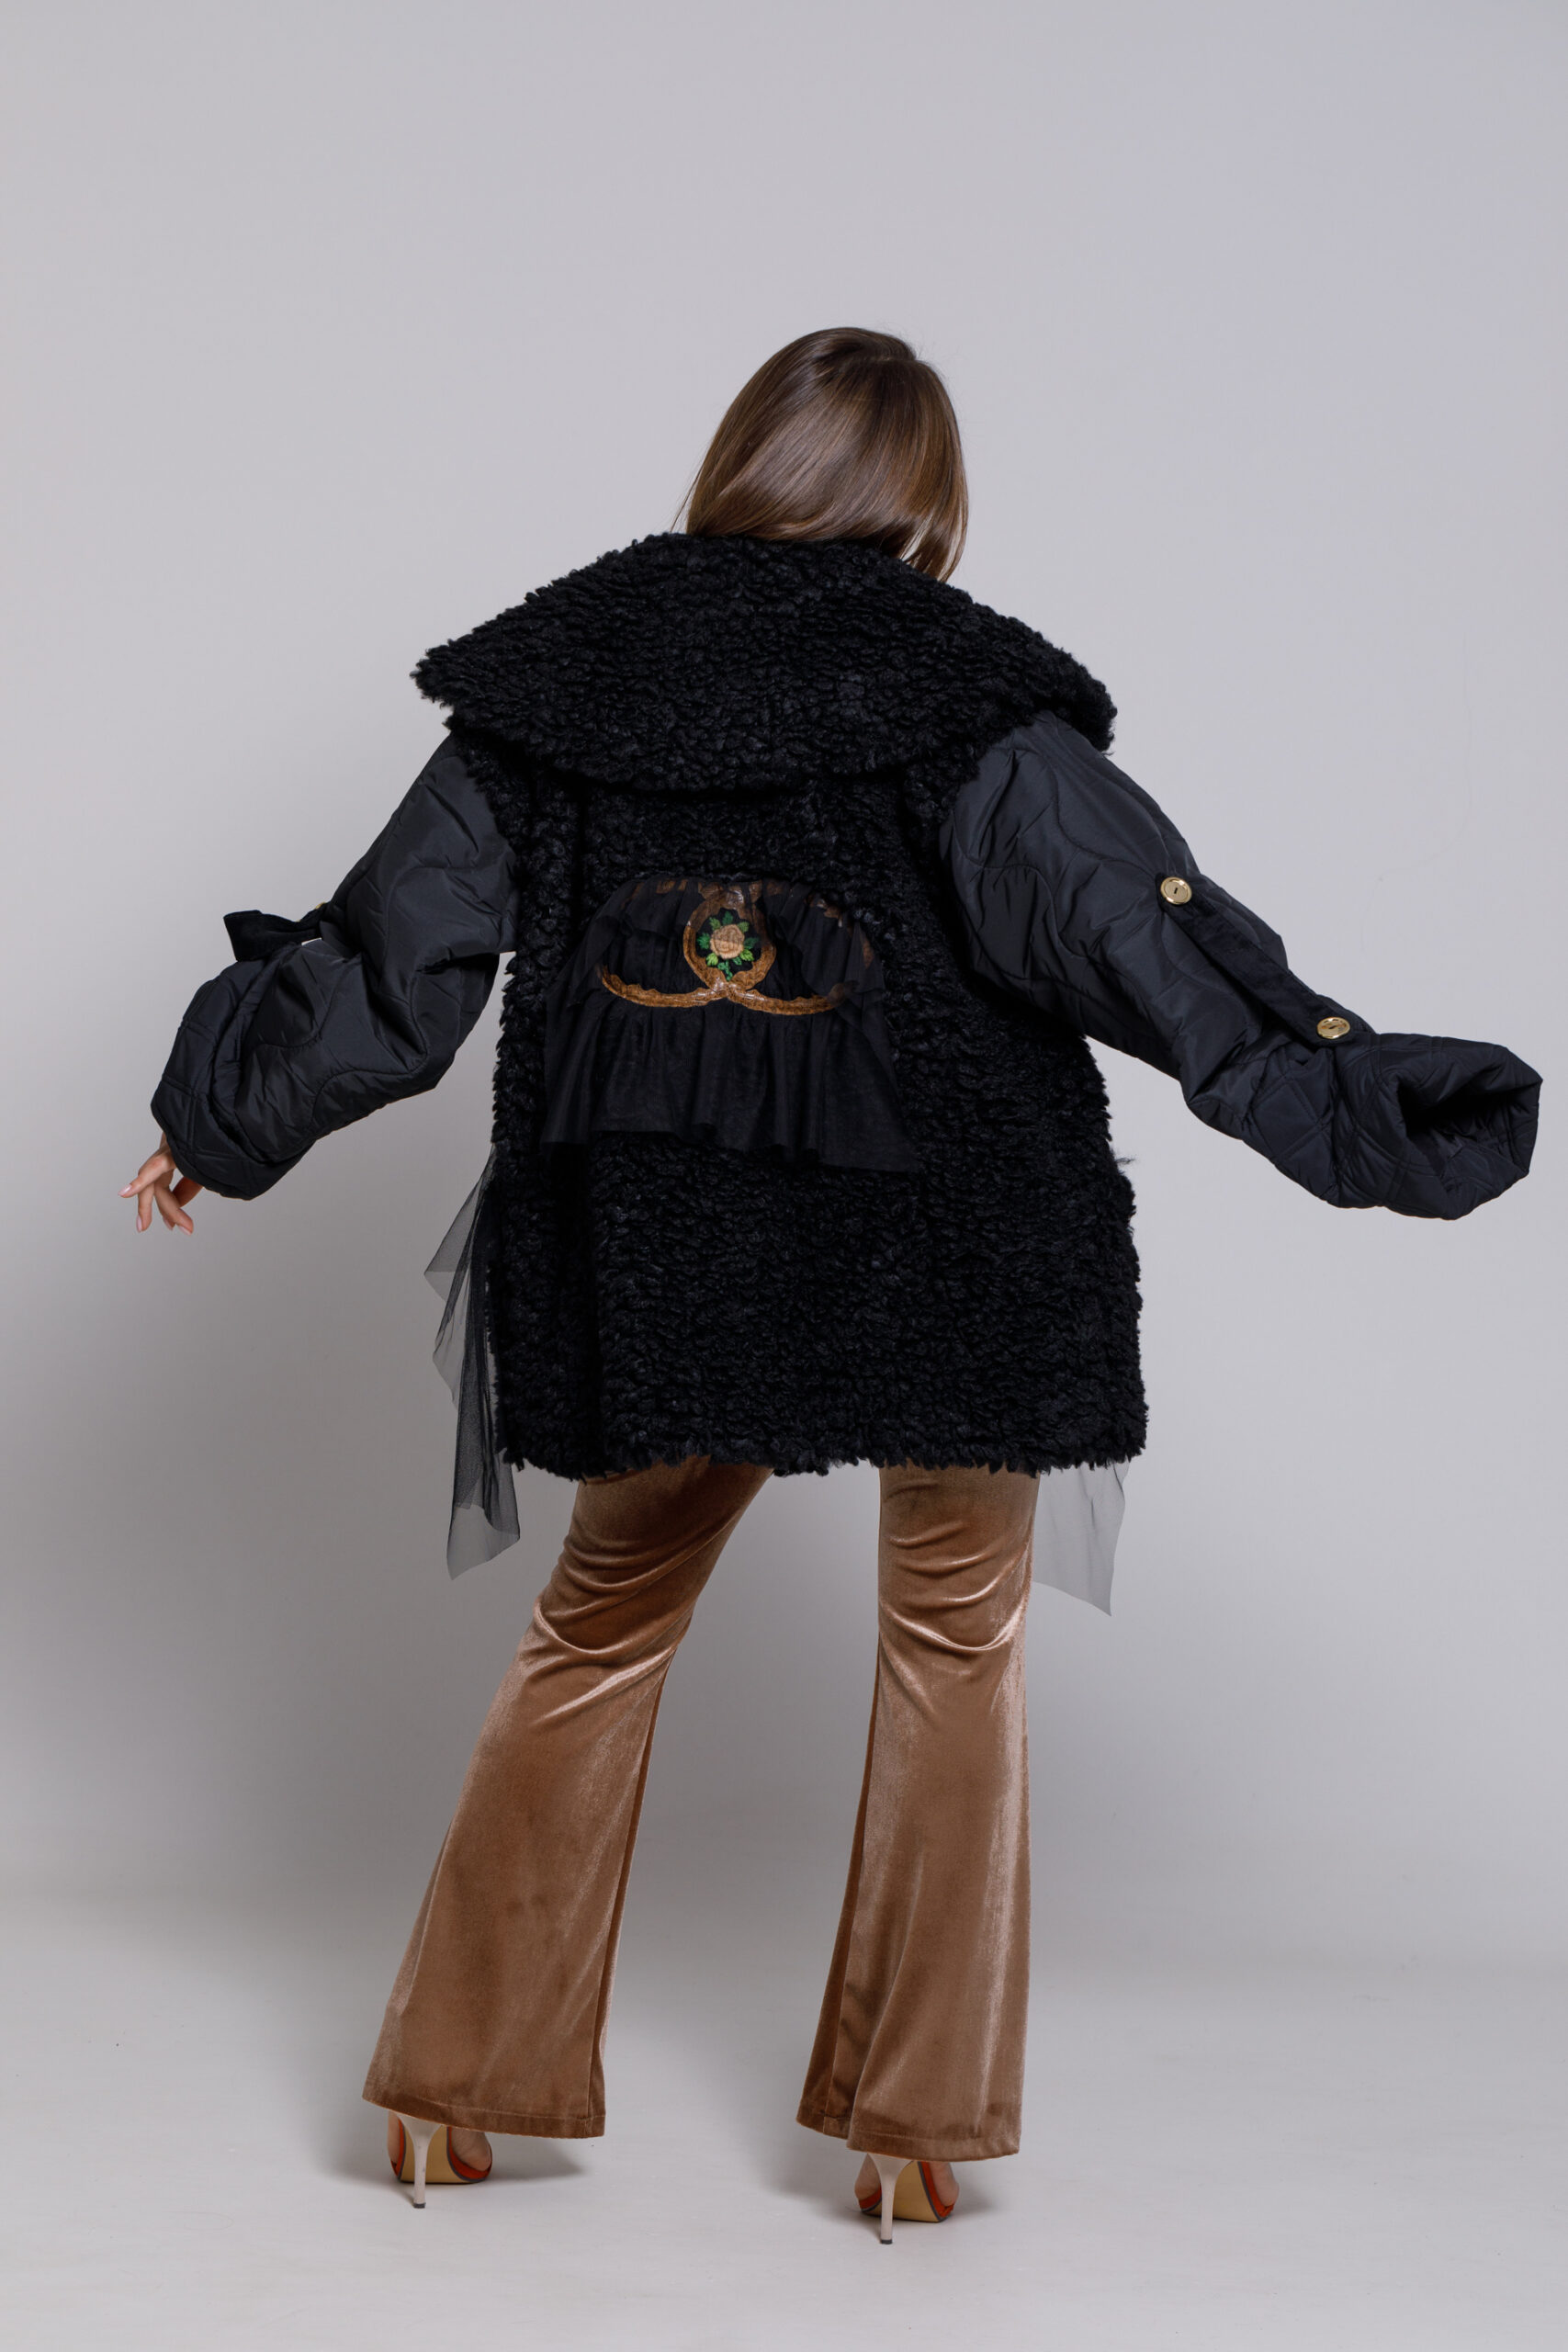 LEDA black quilted jacket with fur. Natural fabrics, original design, handmade embroidery